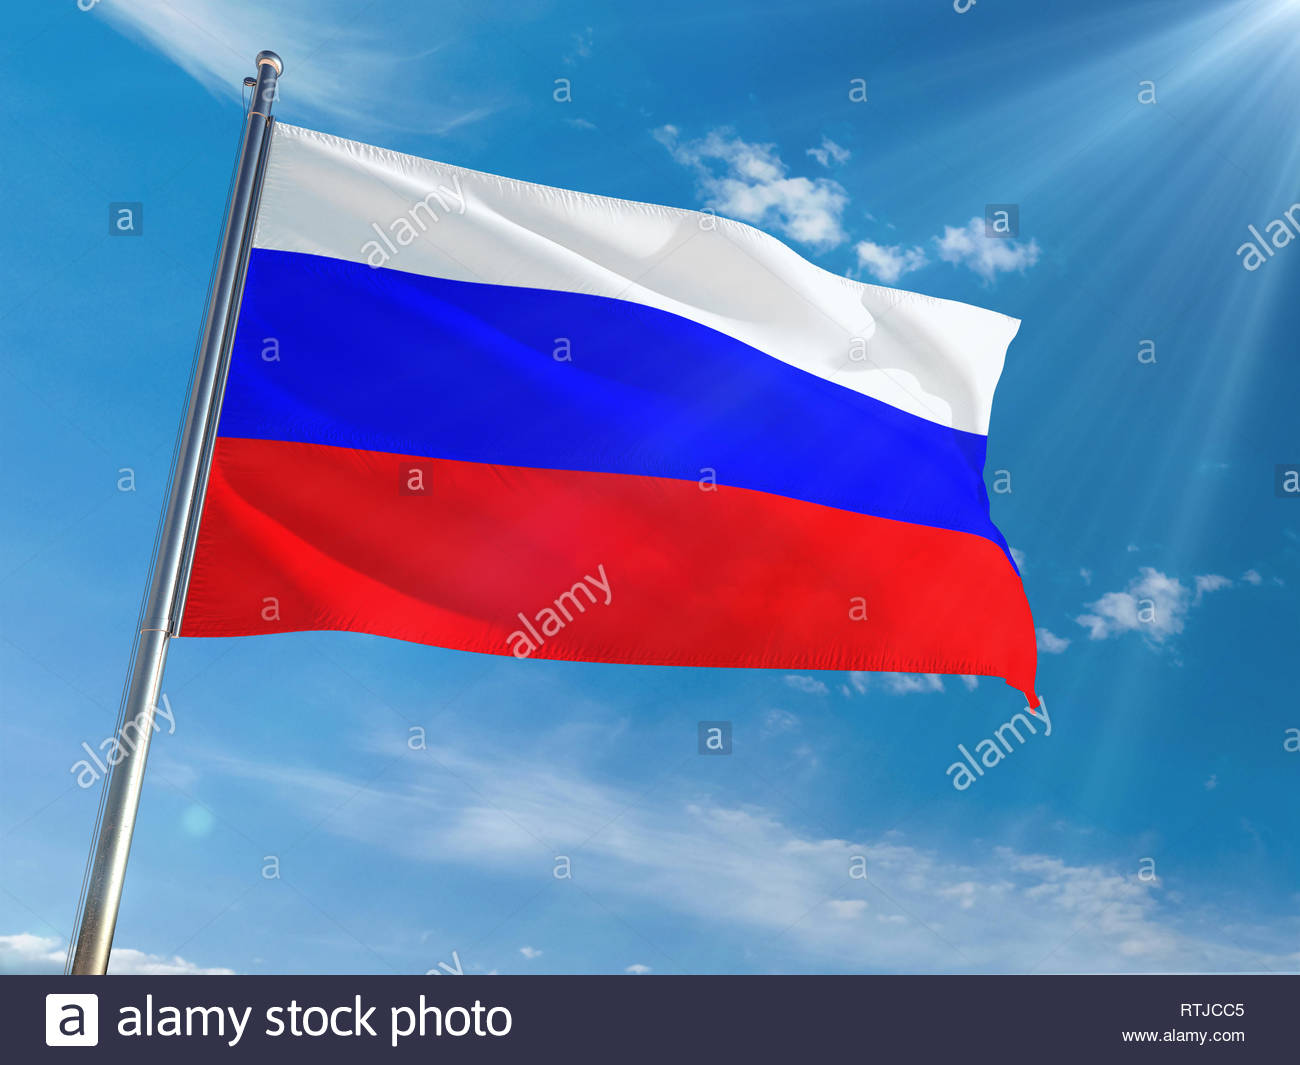 Russia National Flag Waving on pole against sunny blue sky